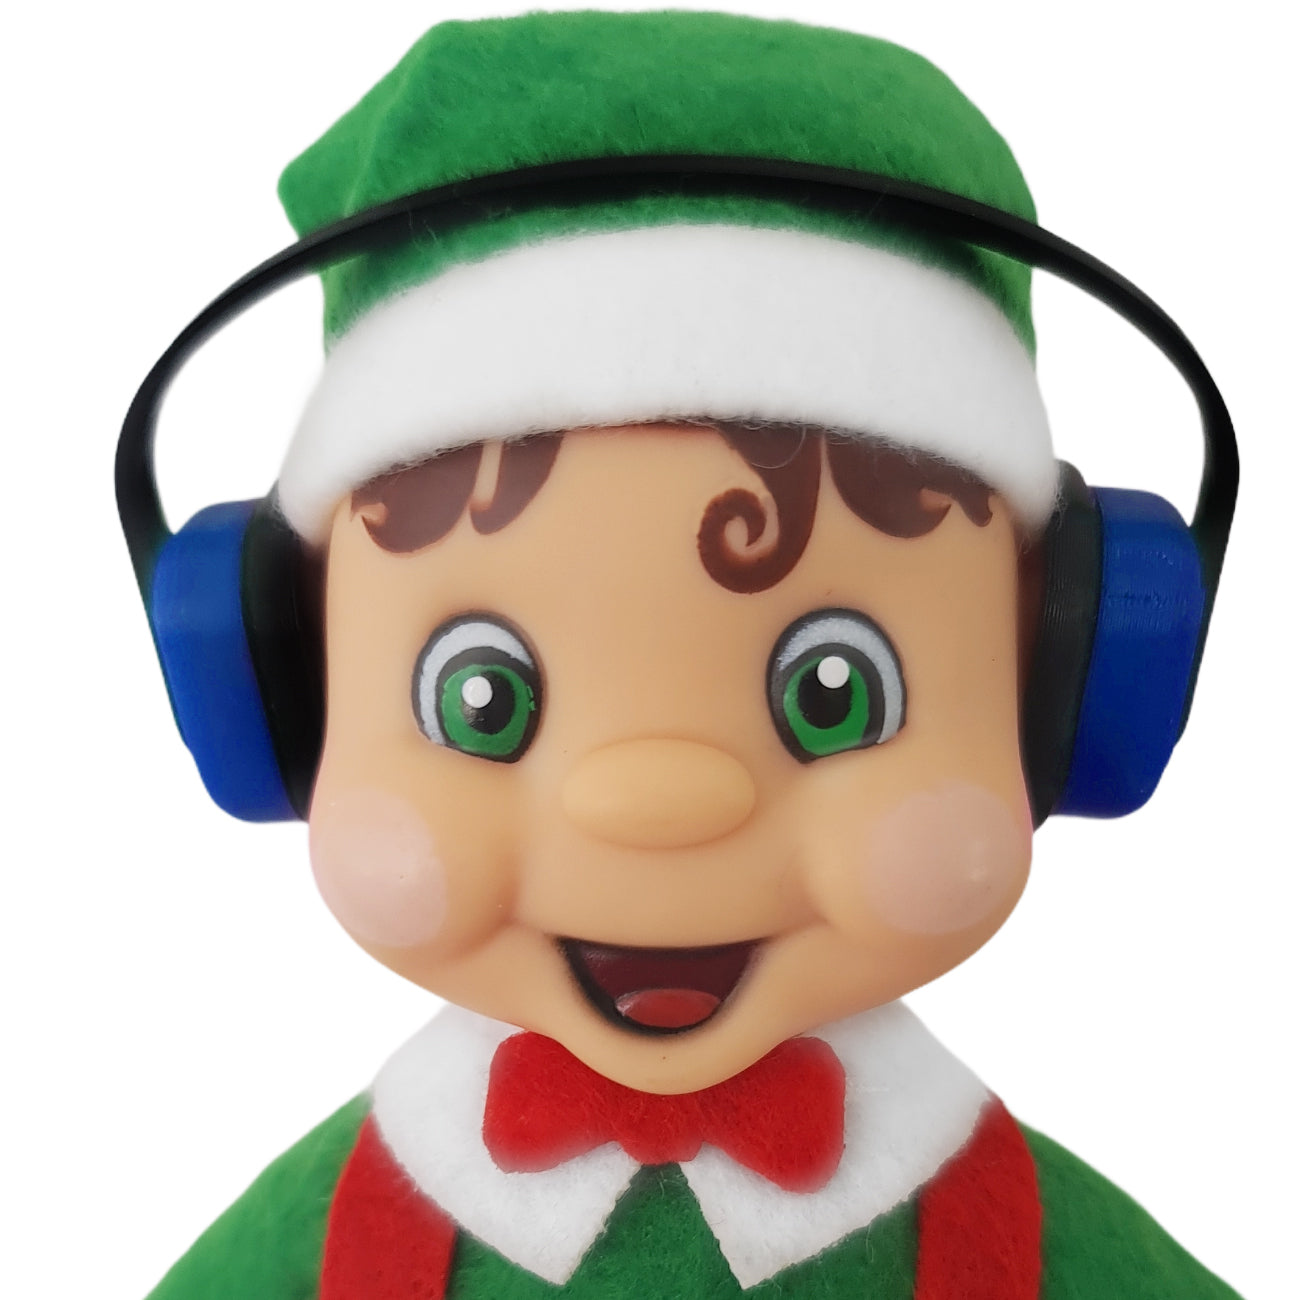 Elf Sized noise cancelling headphones